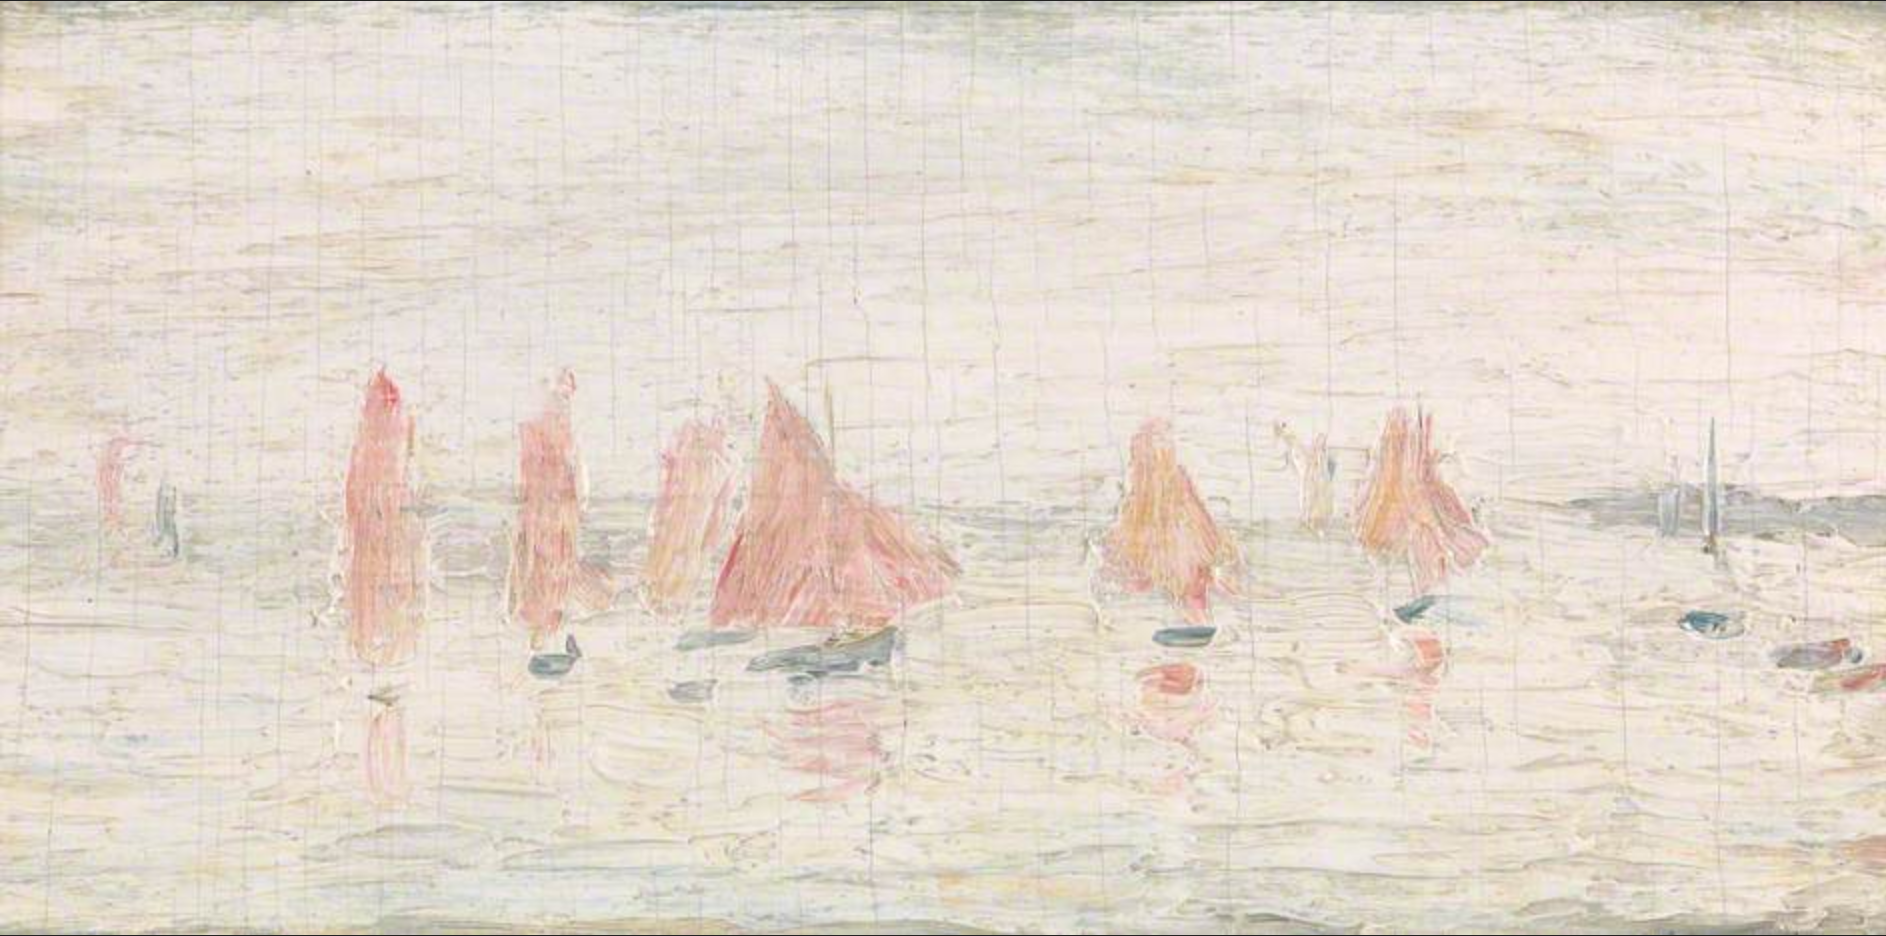 Regatta (1957) by Laurence Stephen Lowry (1887 - 1976), English artist.